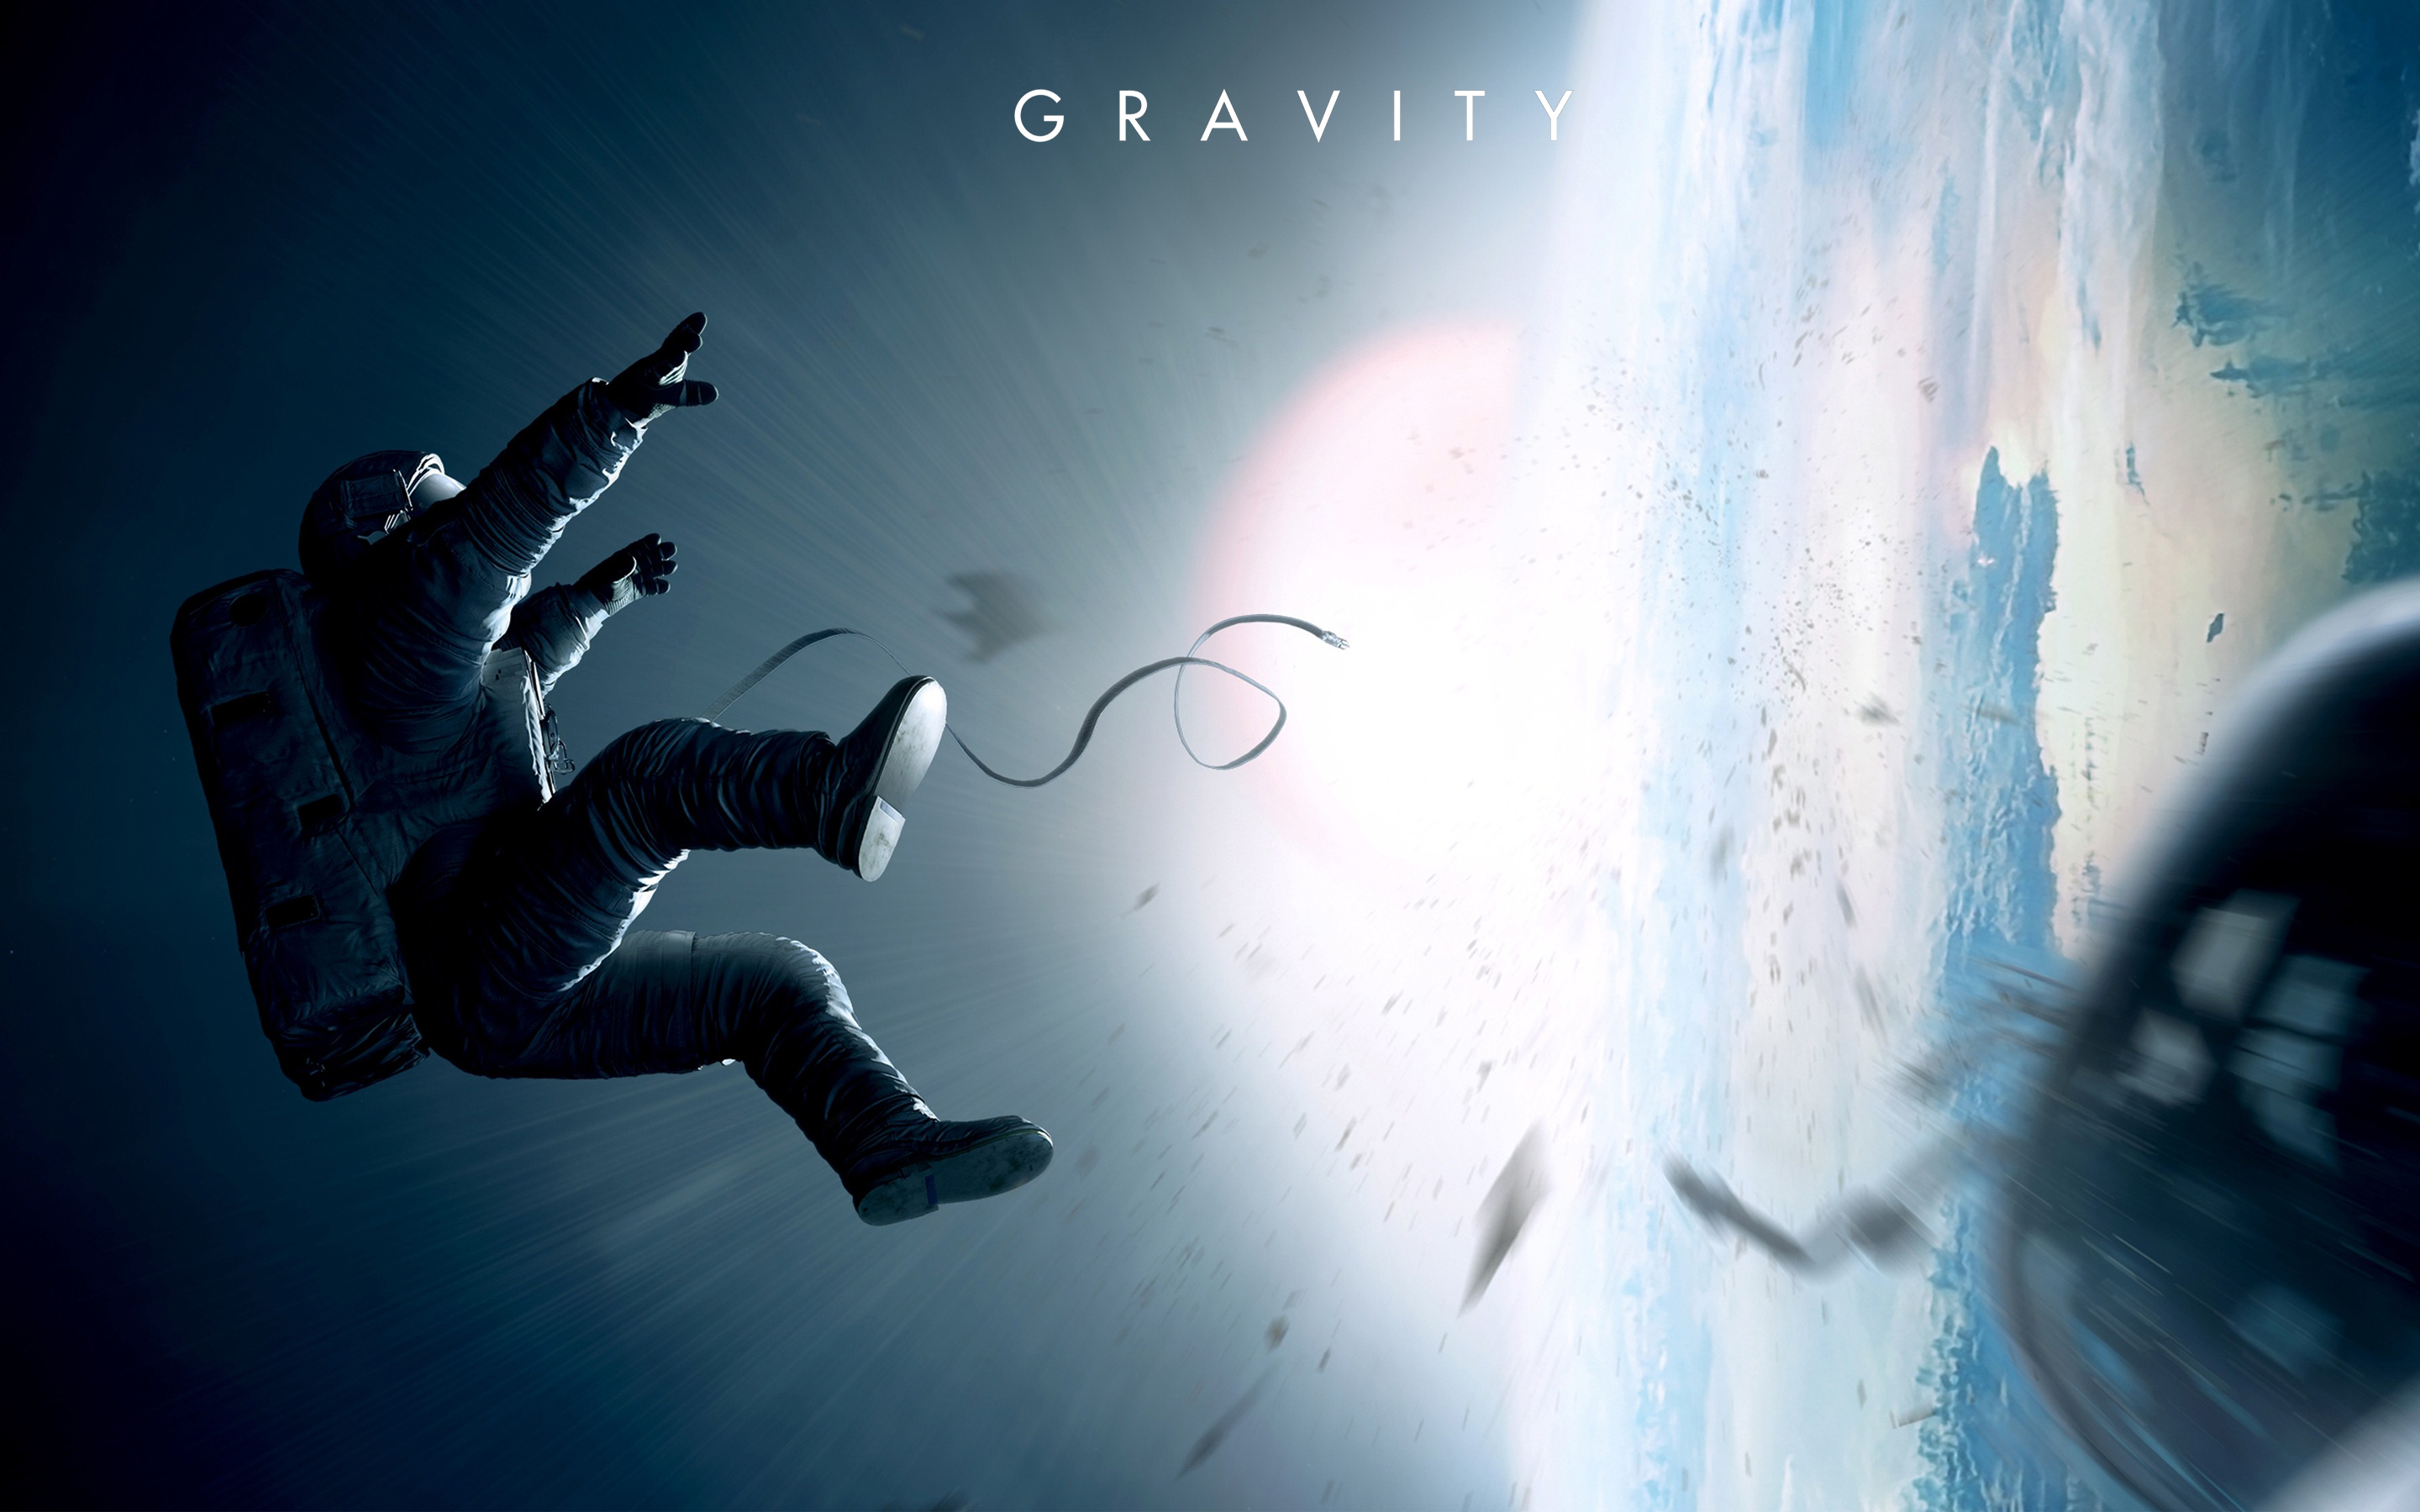 Gravity movie